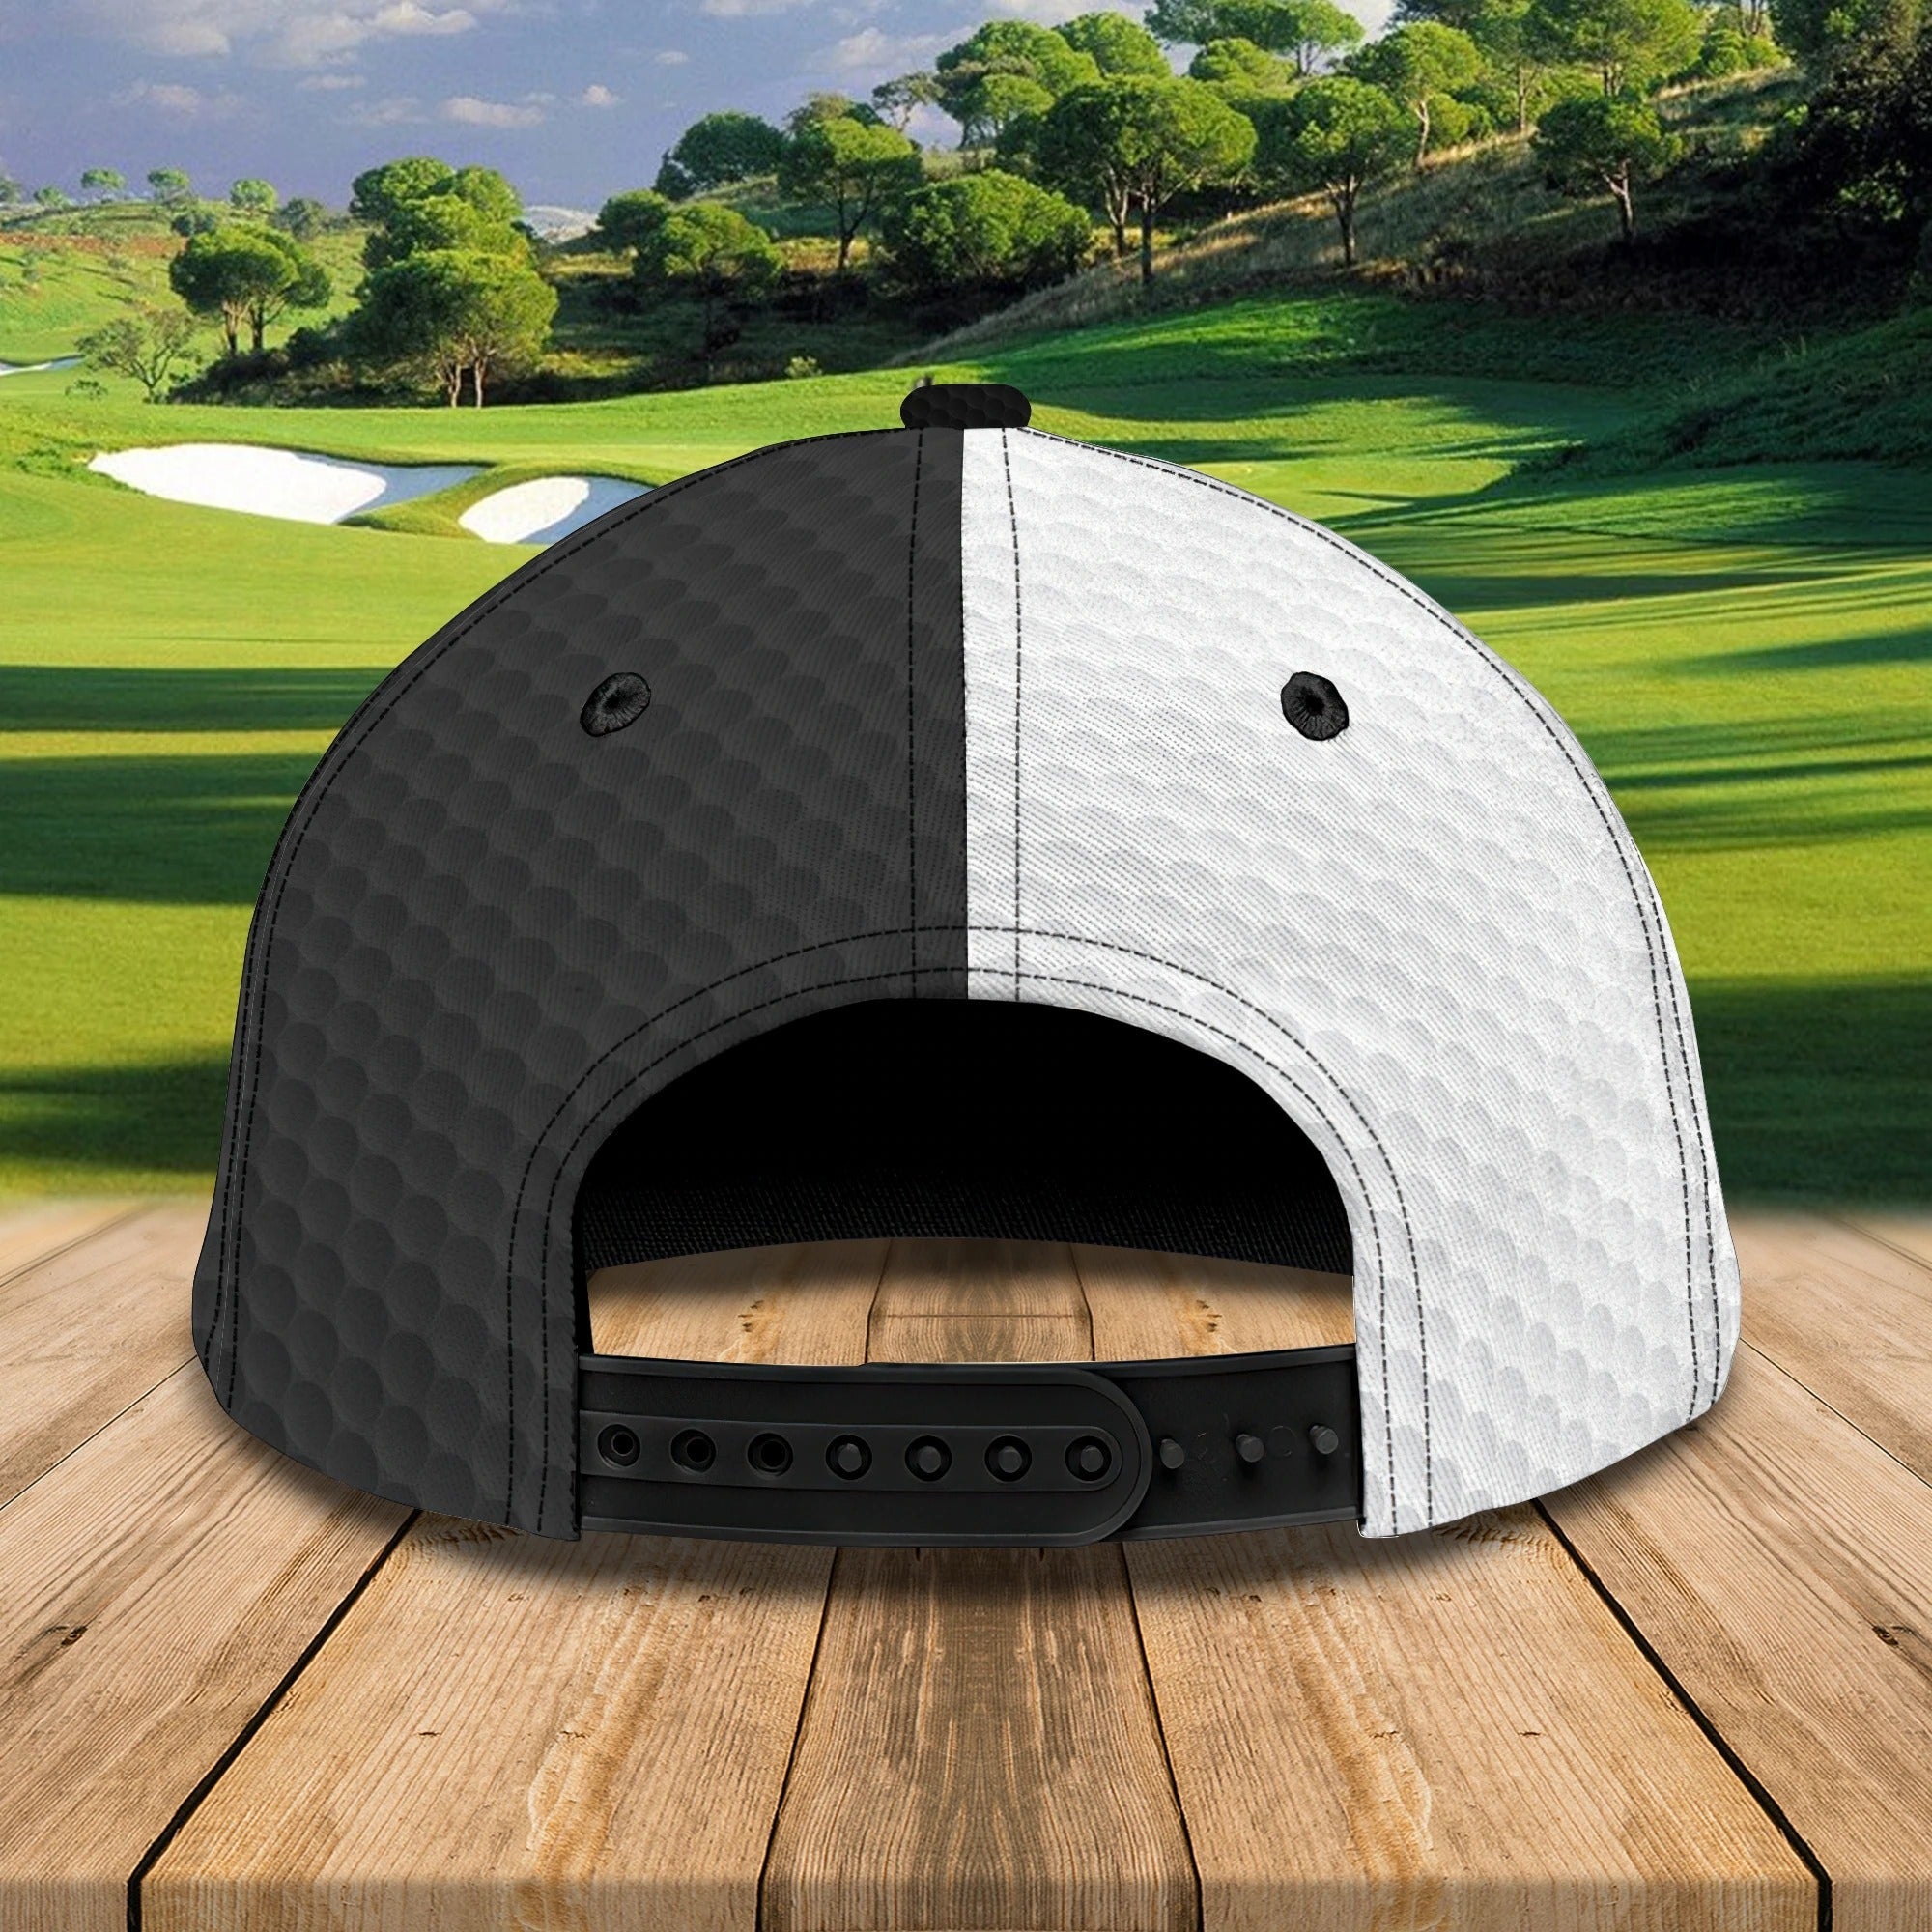 Personalized 3D Full Printed Baseball Cap For Golfer/ Goft Men Caps/ Golf Man Hat/ Cool Golf Hats